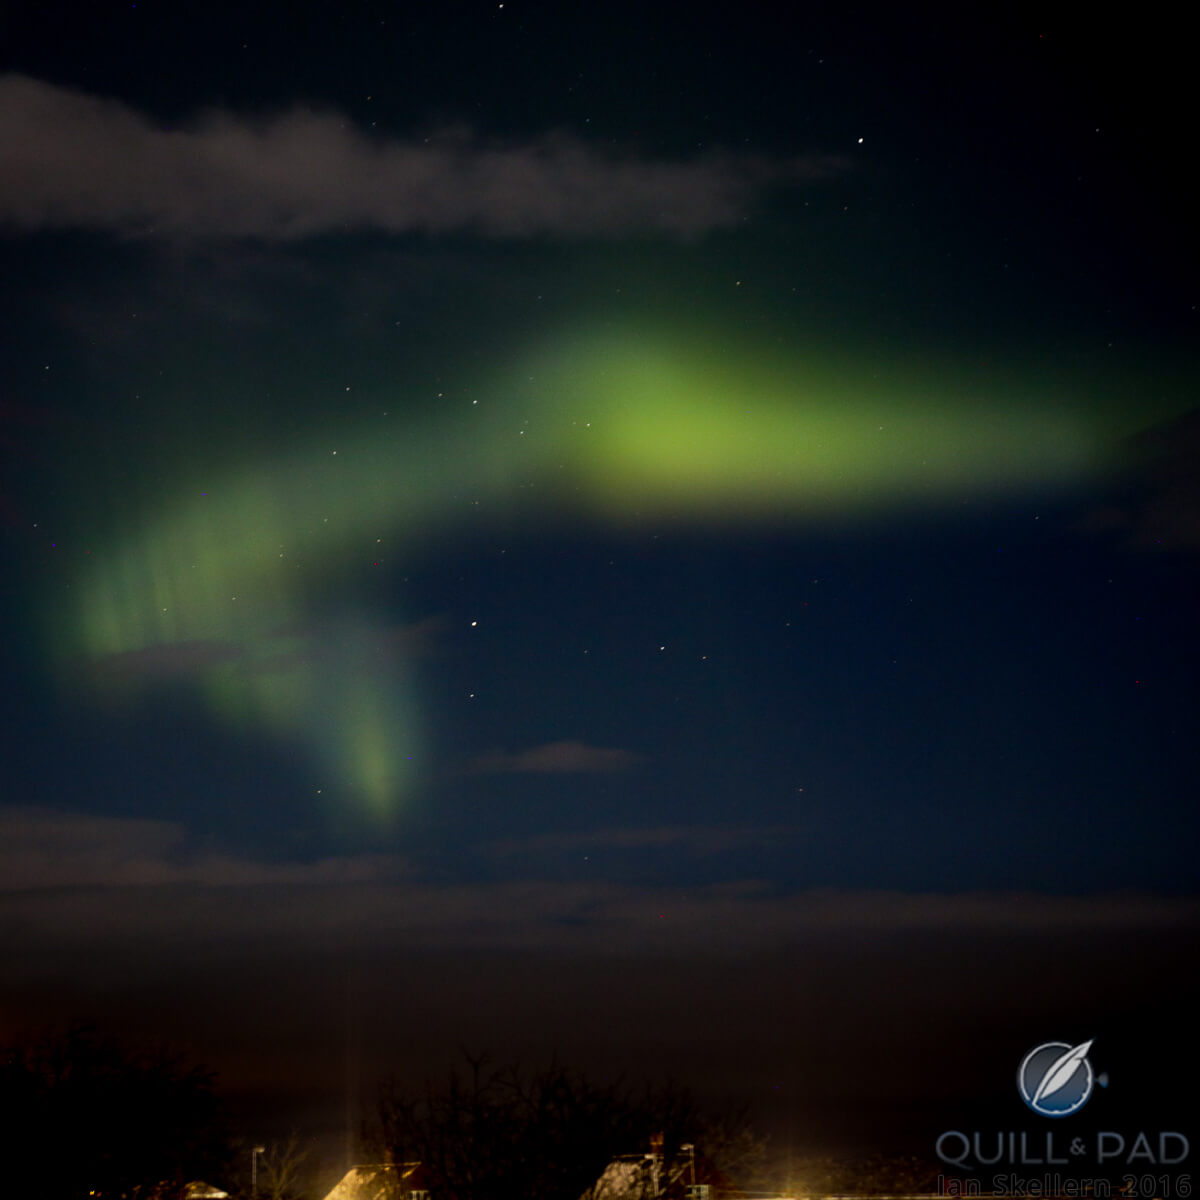 Aurora borealis shot in Abisko, Sweden on the 20th February 2016